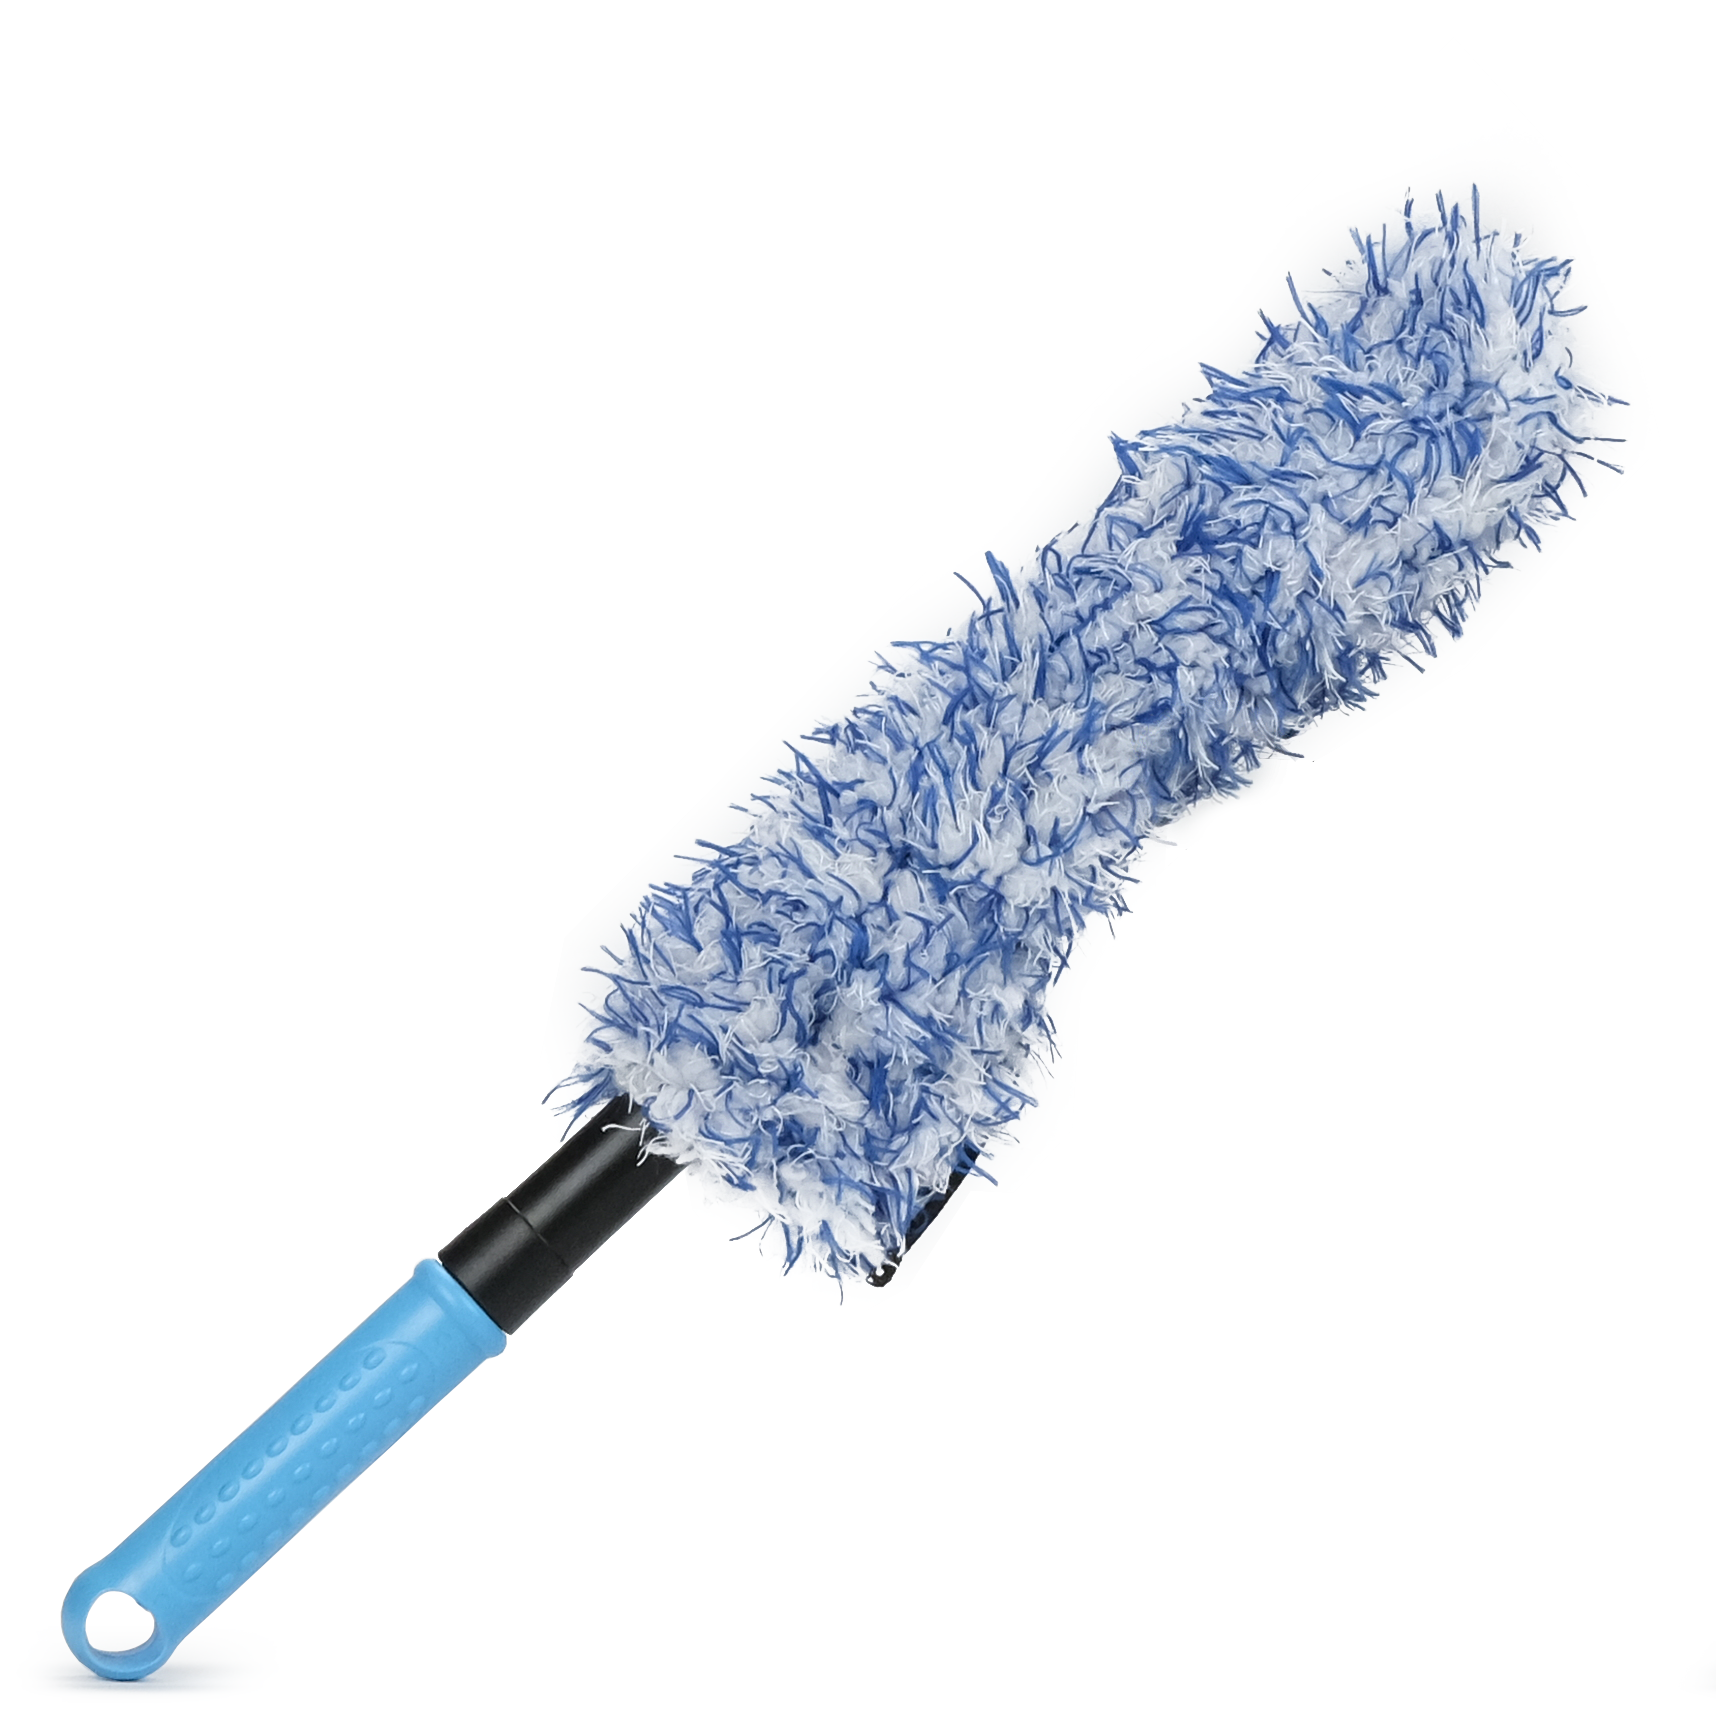 9 inch Flagged-Tip Medium Brush Removes Brake Dust, Mud, & Grime-Blue